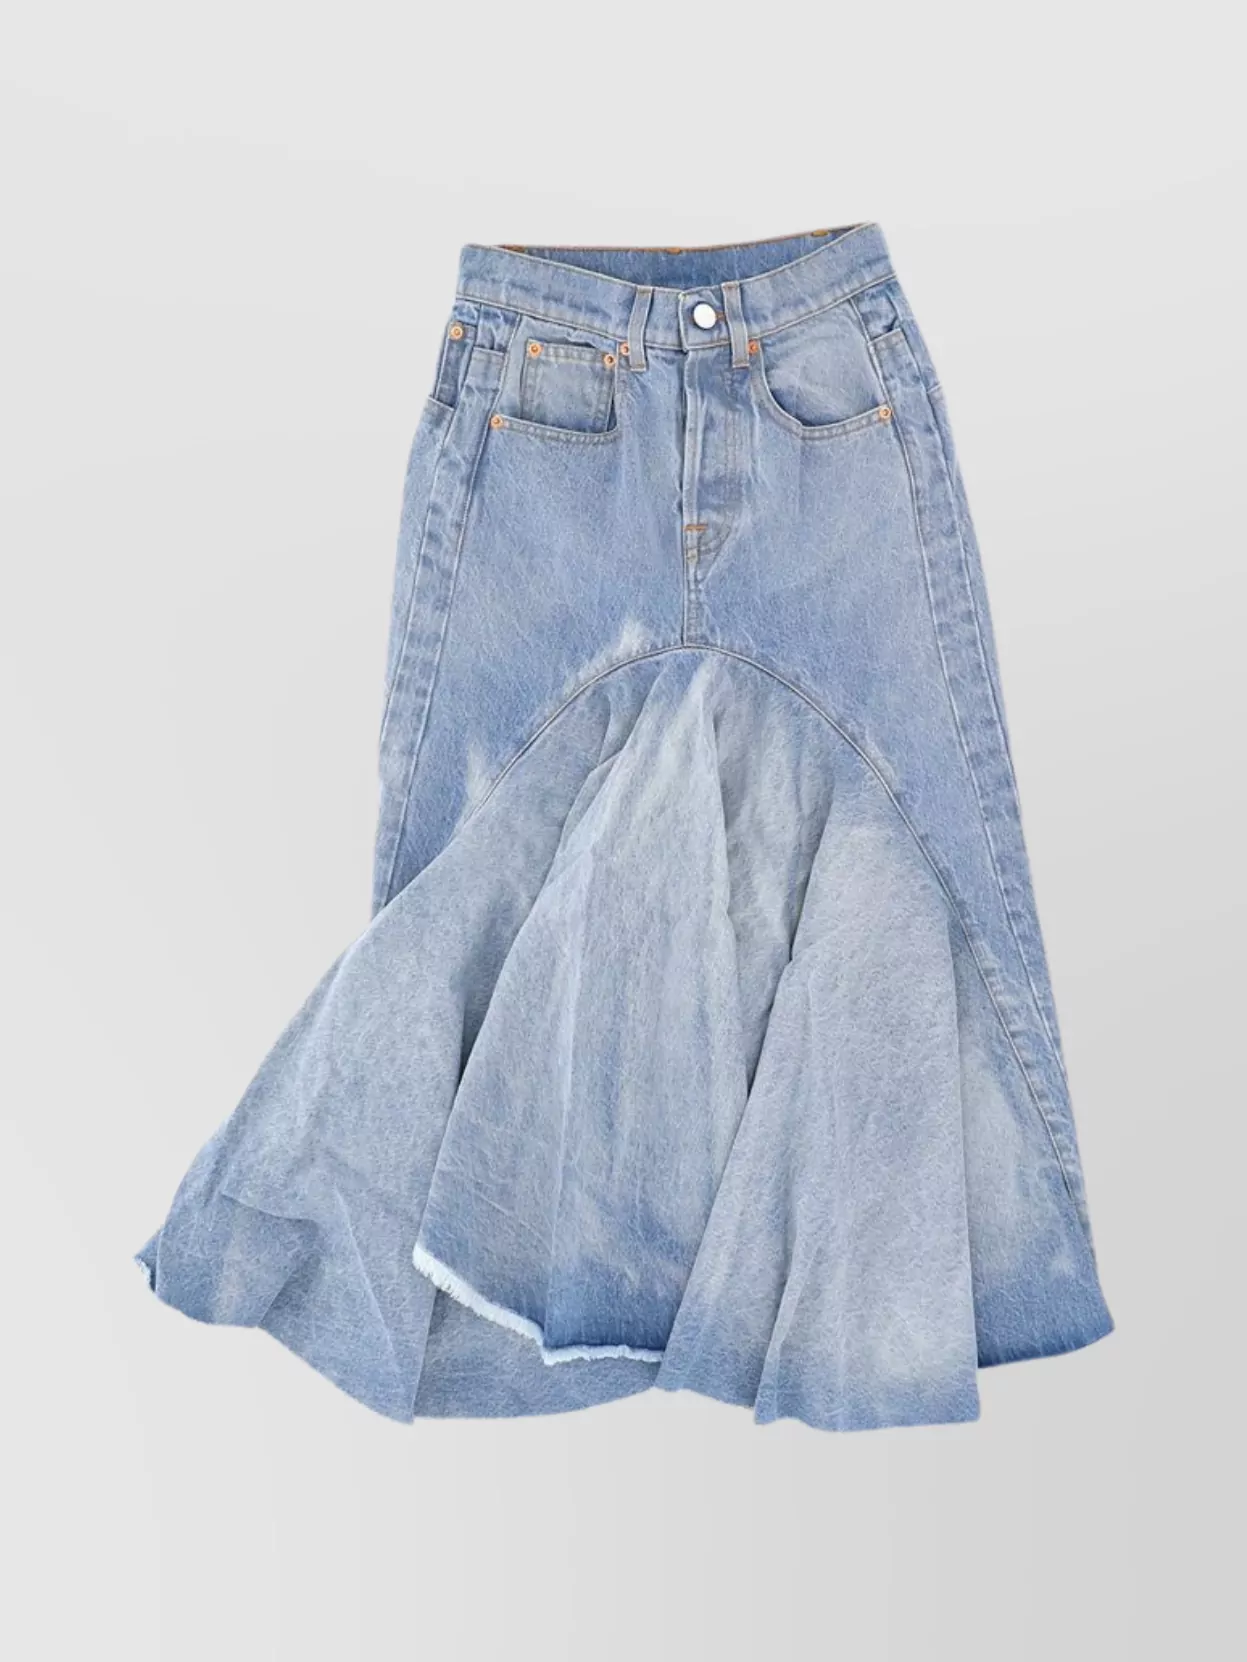 Vetements Denim Skirt Featuring Belt Loops In Blue